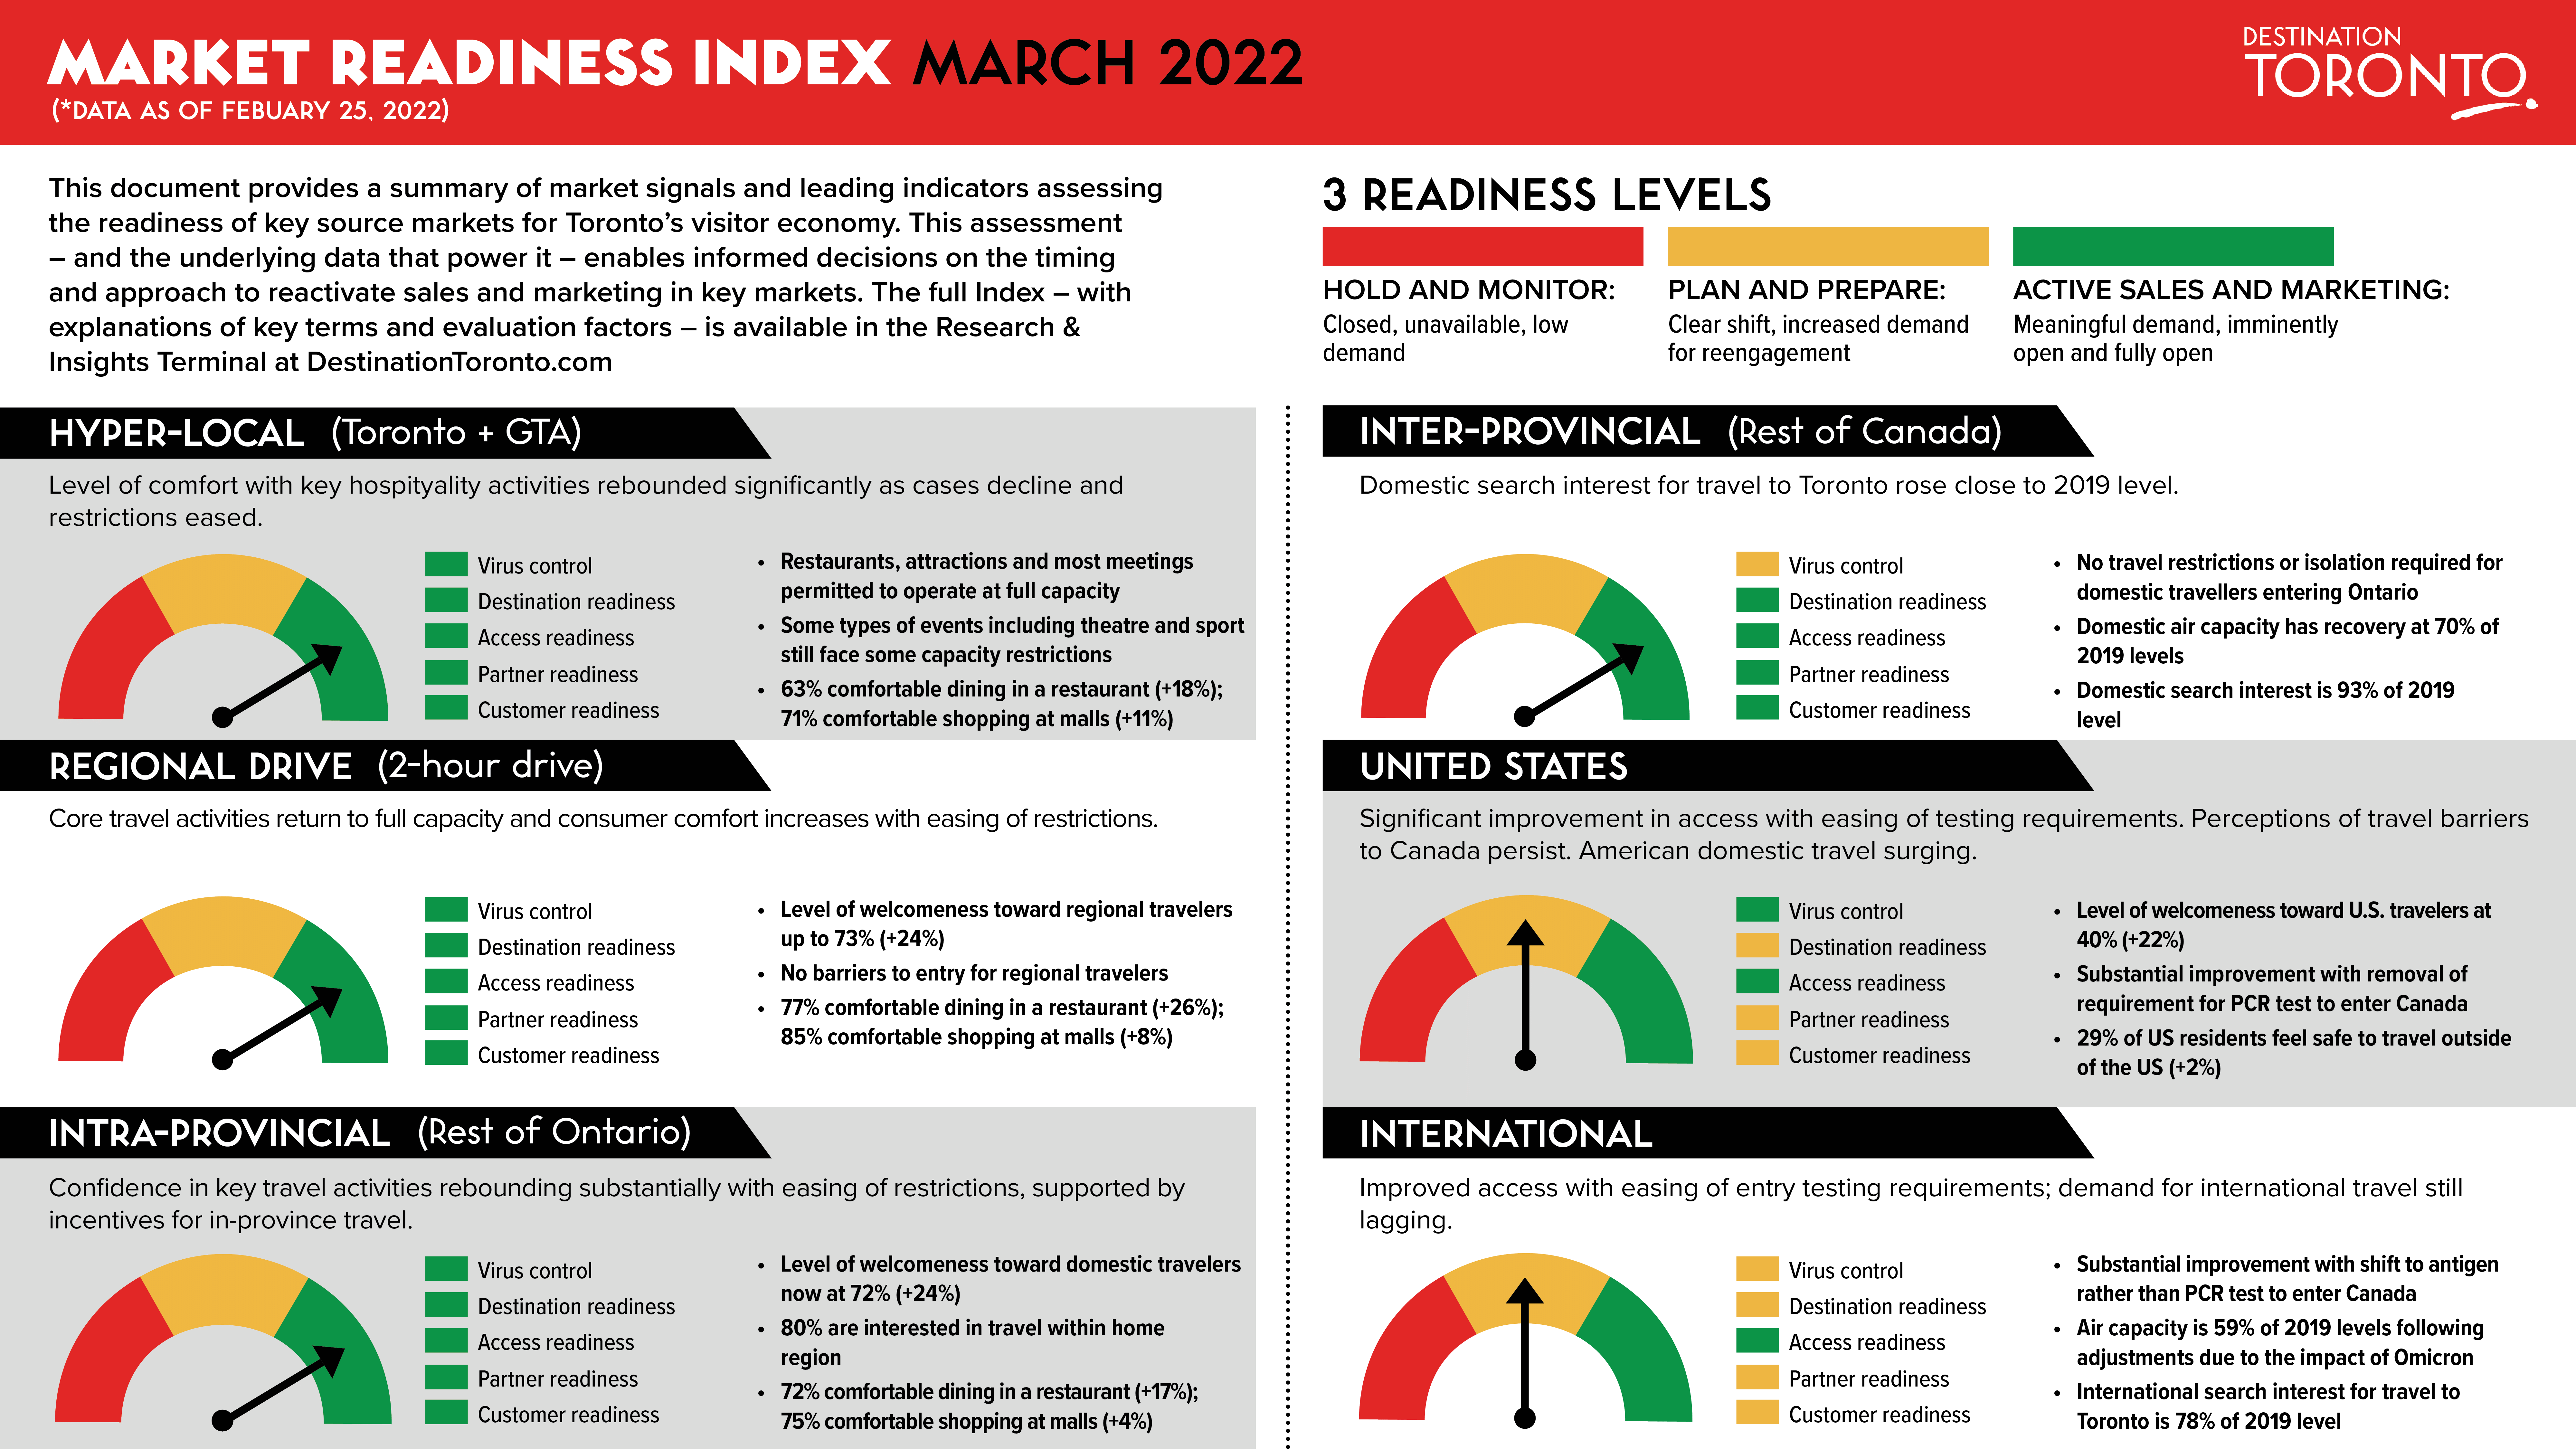 Market Readiness Index